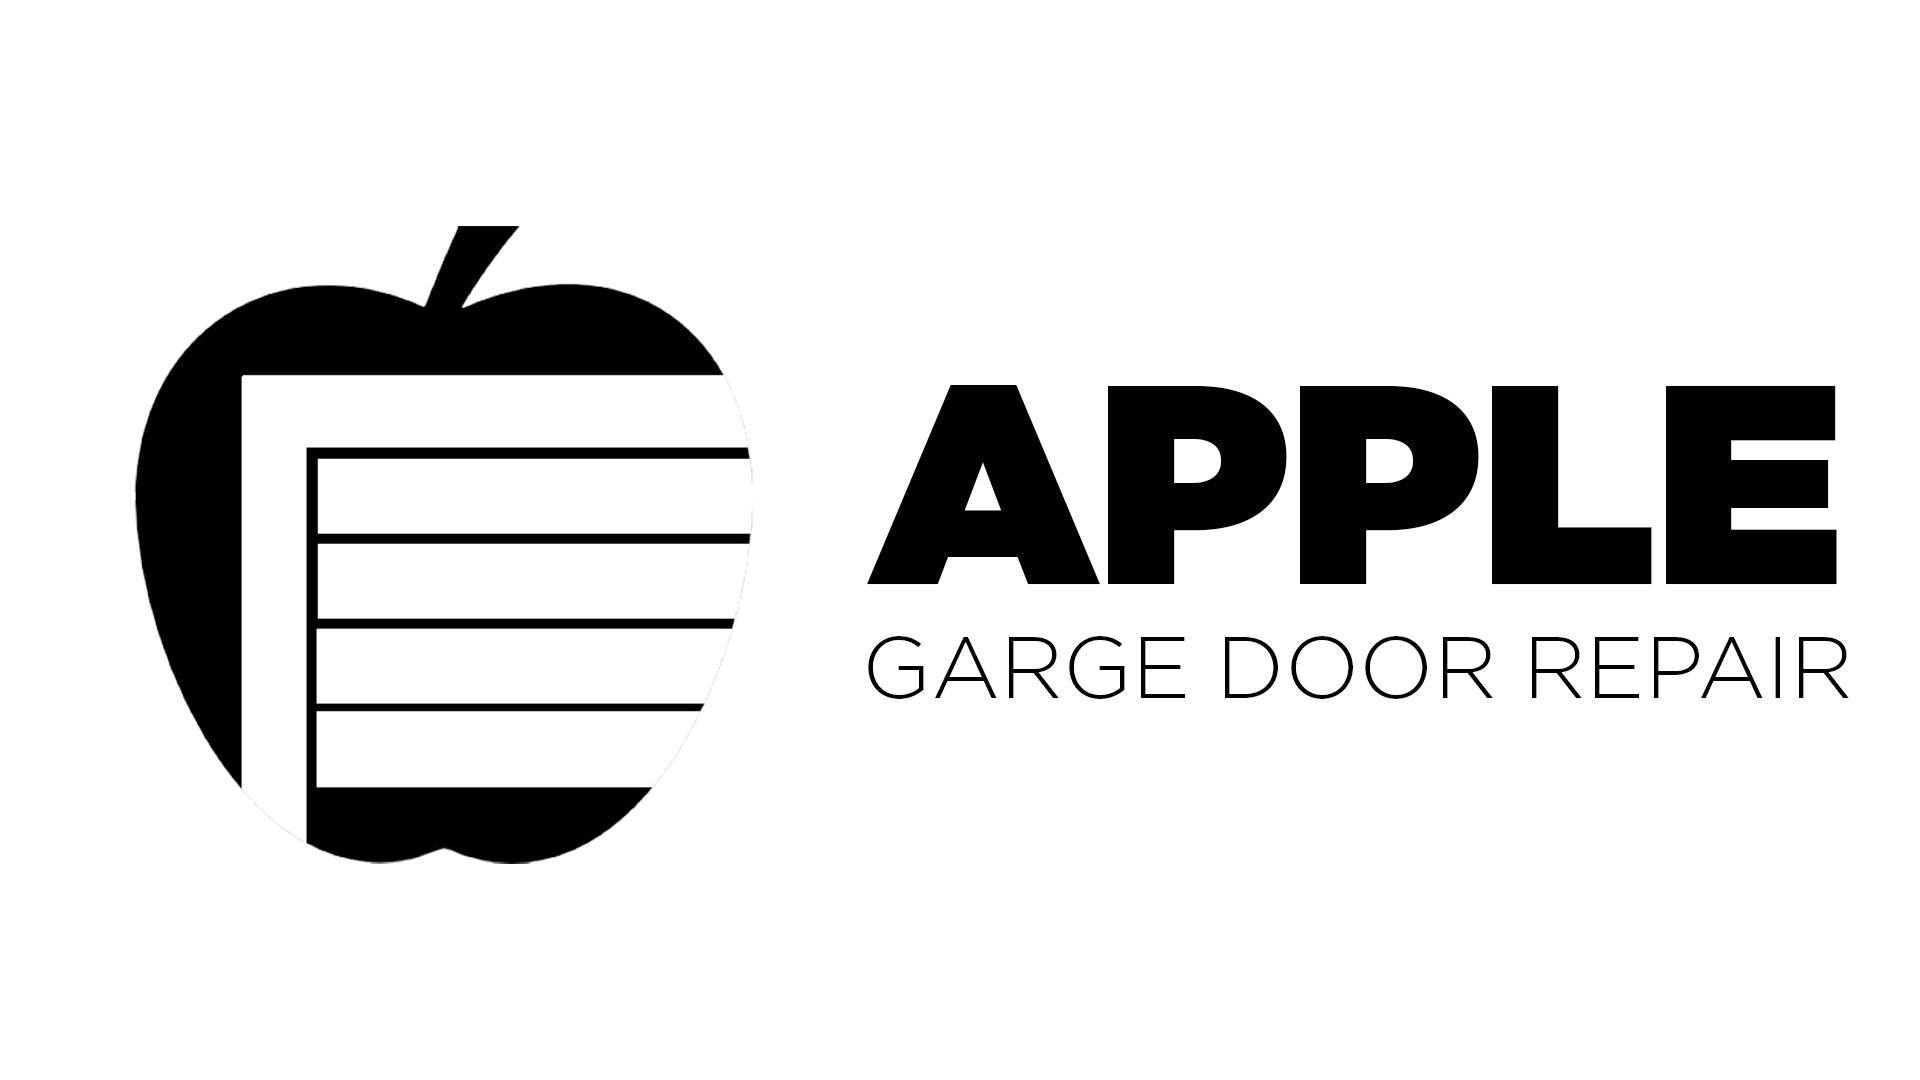 garage door repair companies near me